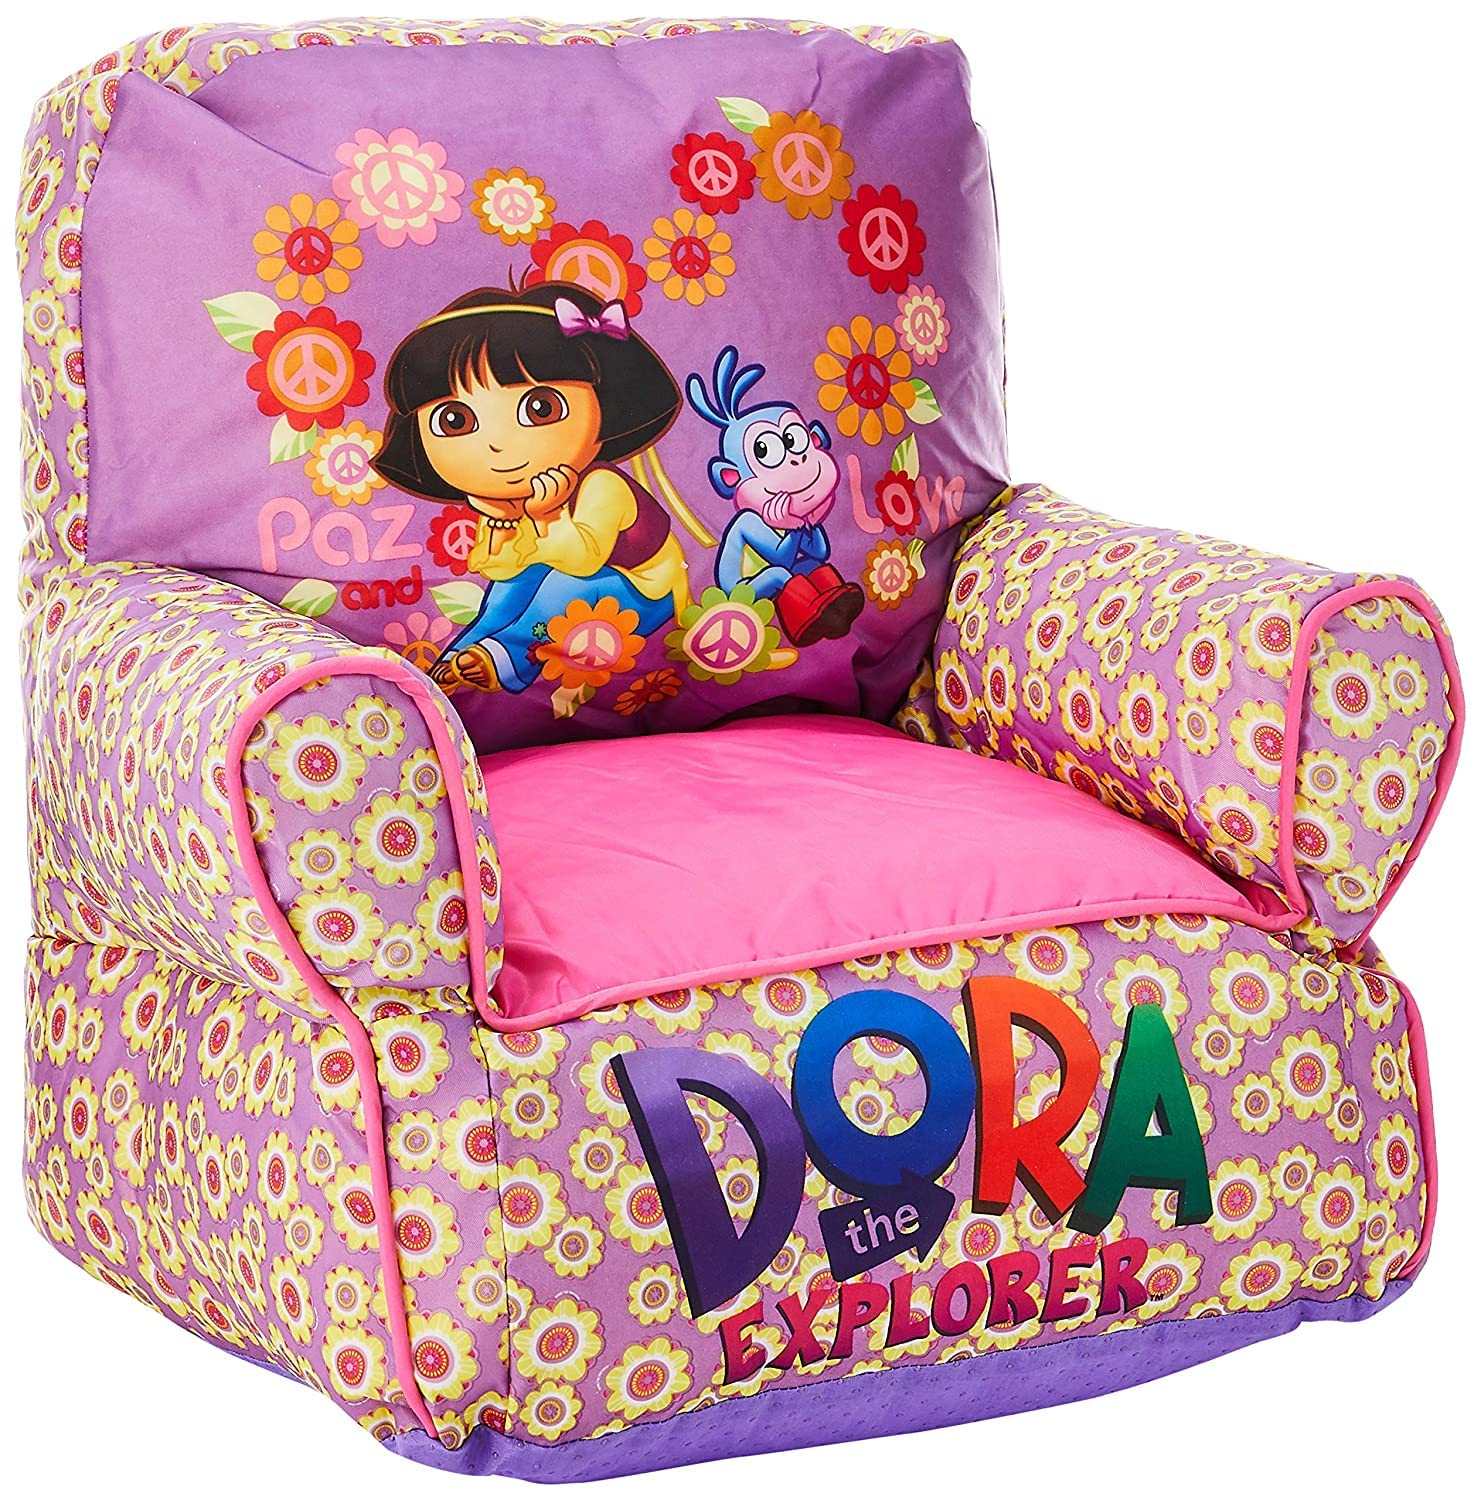 Nickelodeon Dora the Explorer Bean Bag Sofa chair, Purple